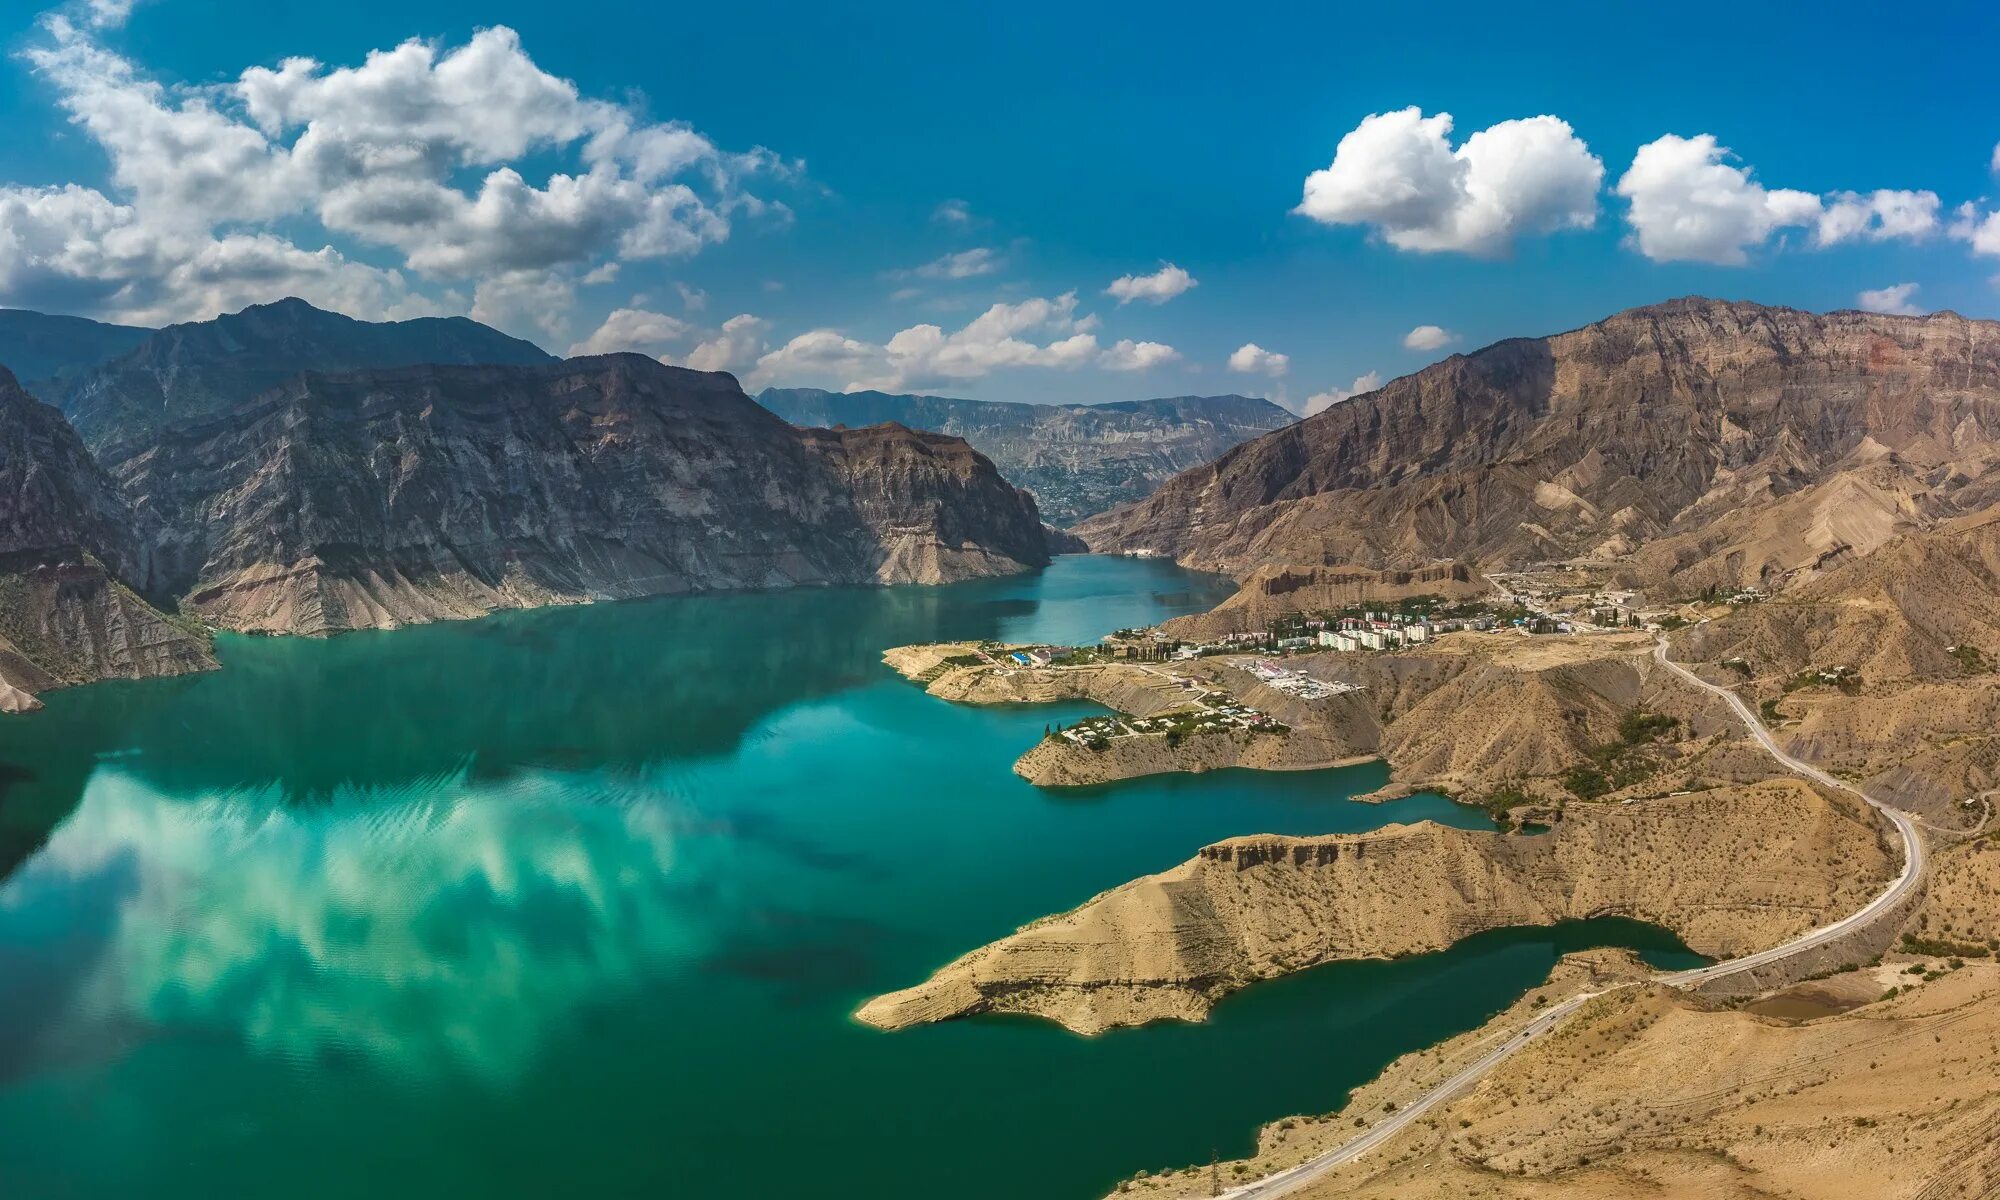 Сулакский каньон Республика Дагестан. Сулакский каньон водохранилище. Сулакский каньон озеро. Сулакский каньон Дагестан 2022. Сулакский каньон тур